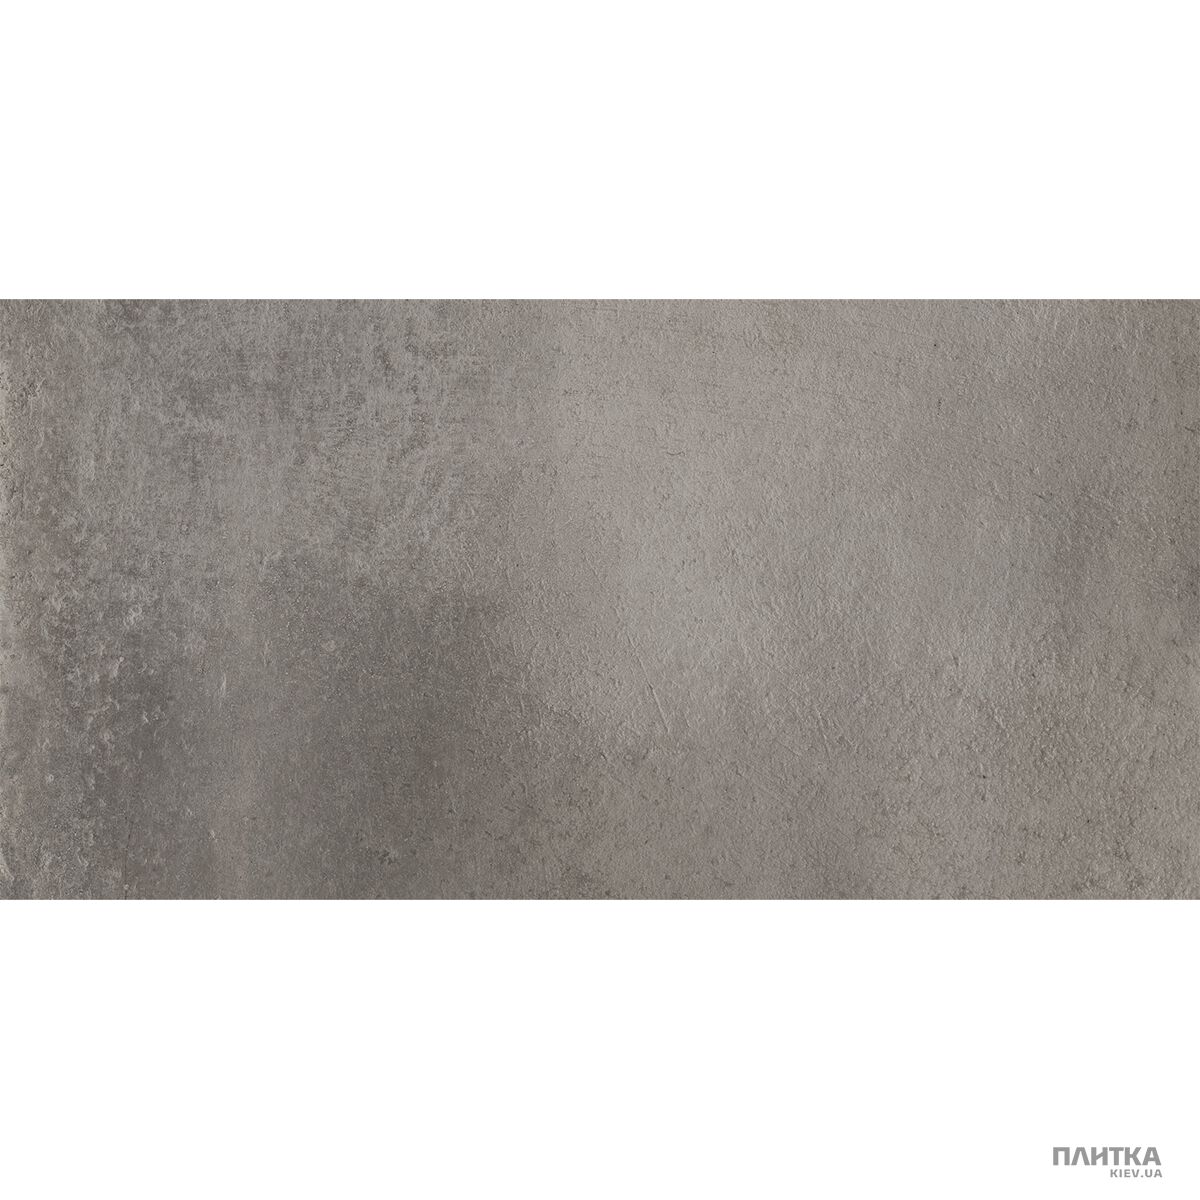 Керамогранит Golden Tile Concrete CONCRETE DARK GREY 18П630 серый